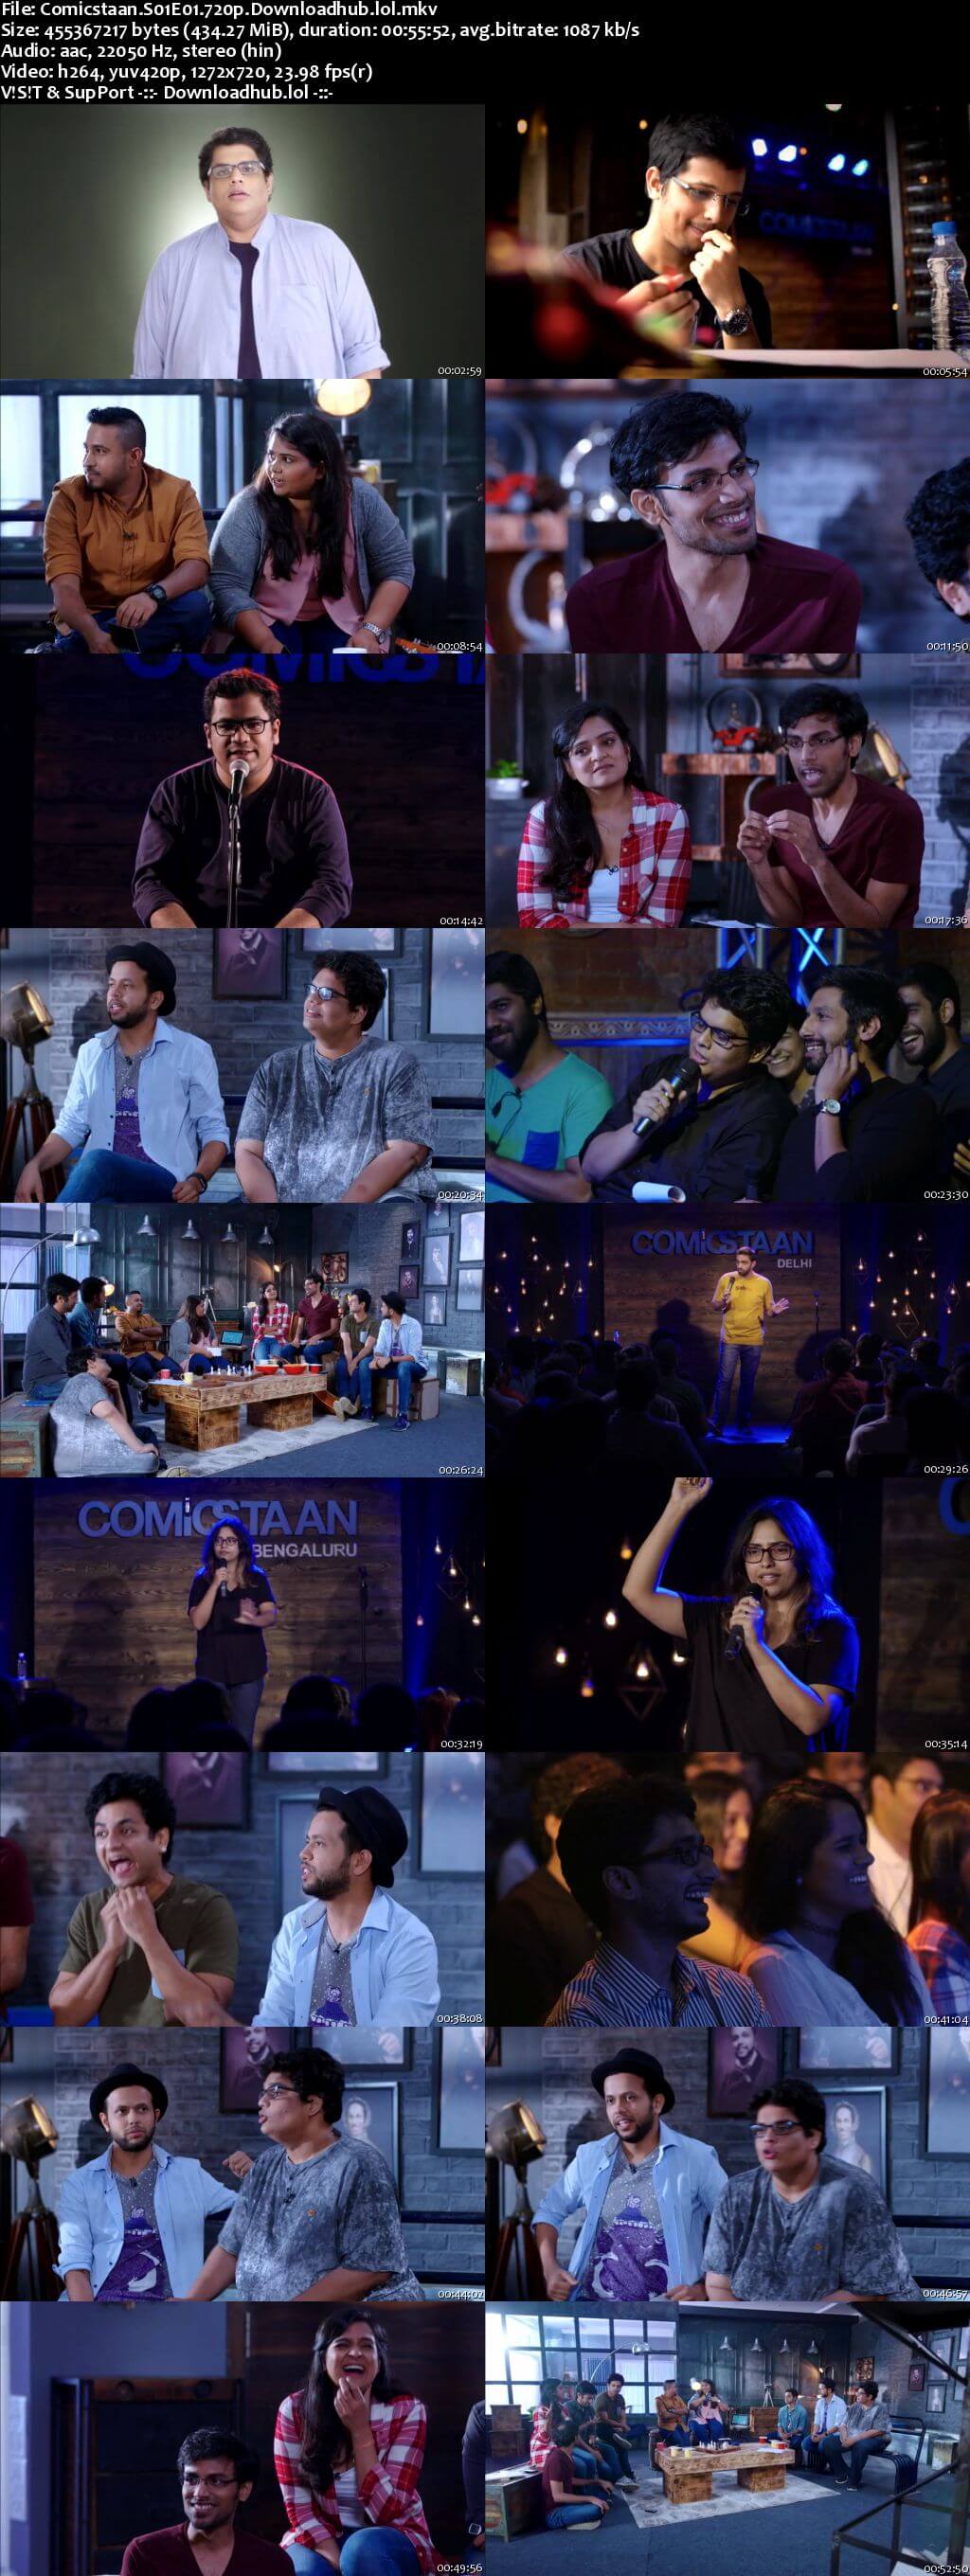 Comicstaan 2018 Hindi Season 01 Complete 720p HDRip x264